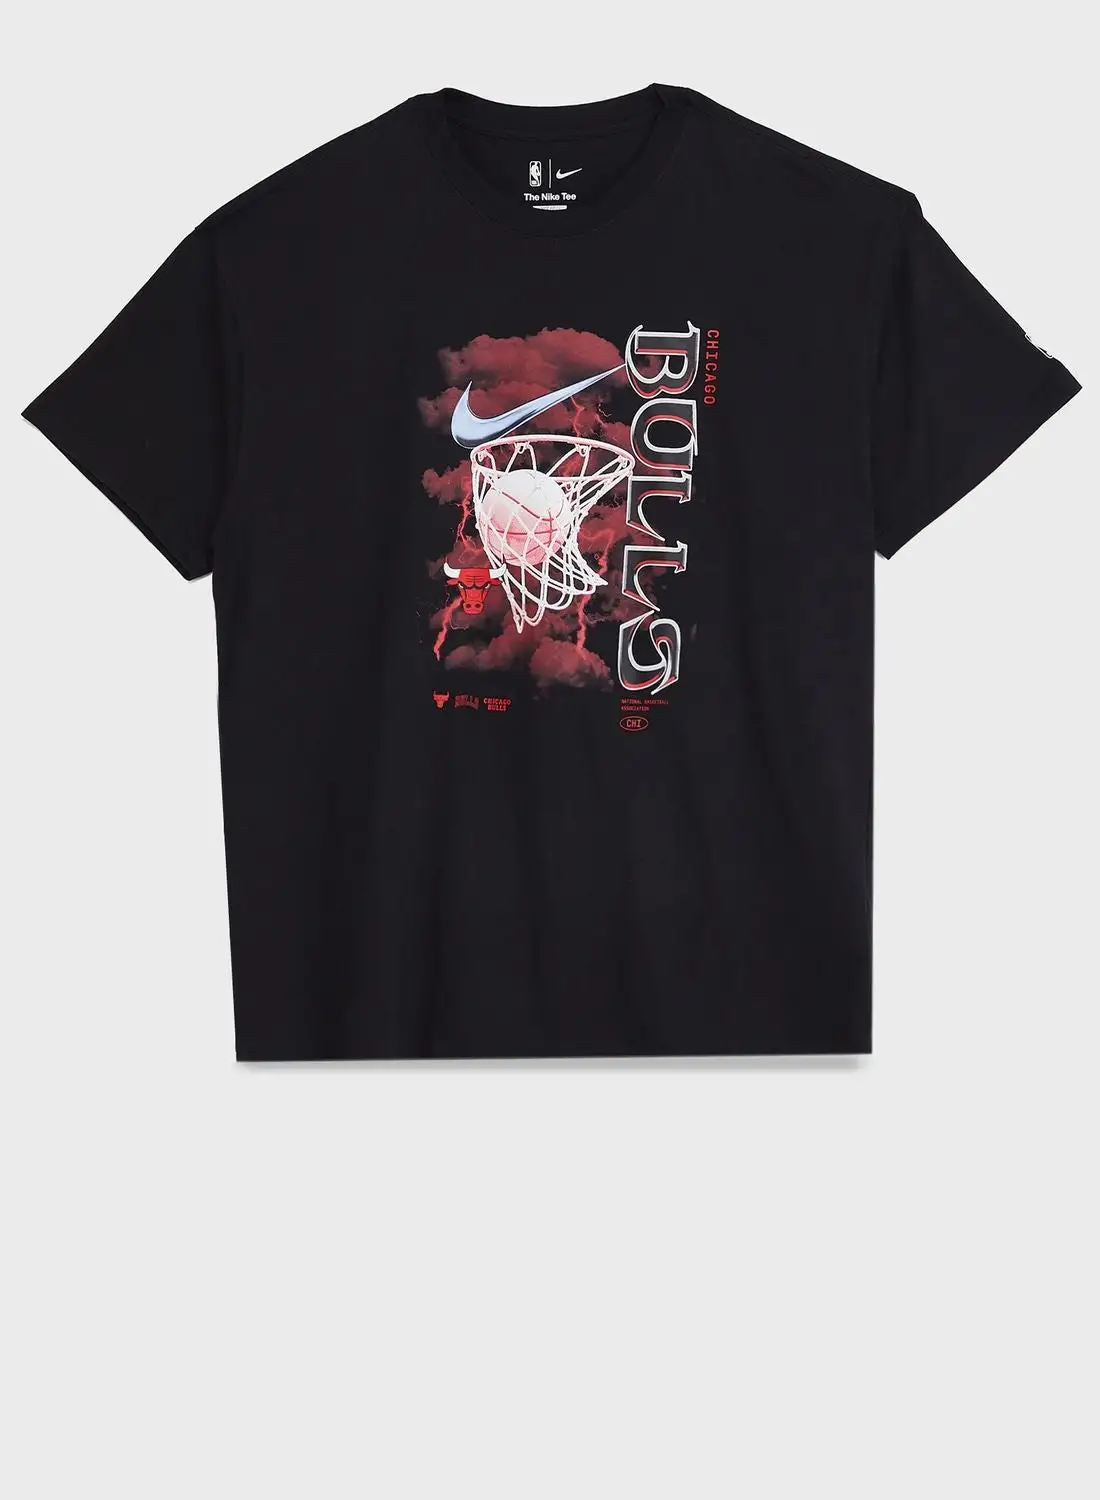 Nike Chicago Bulls M90 T-Shirt